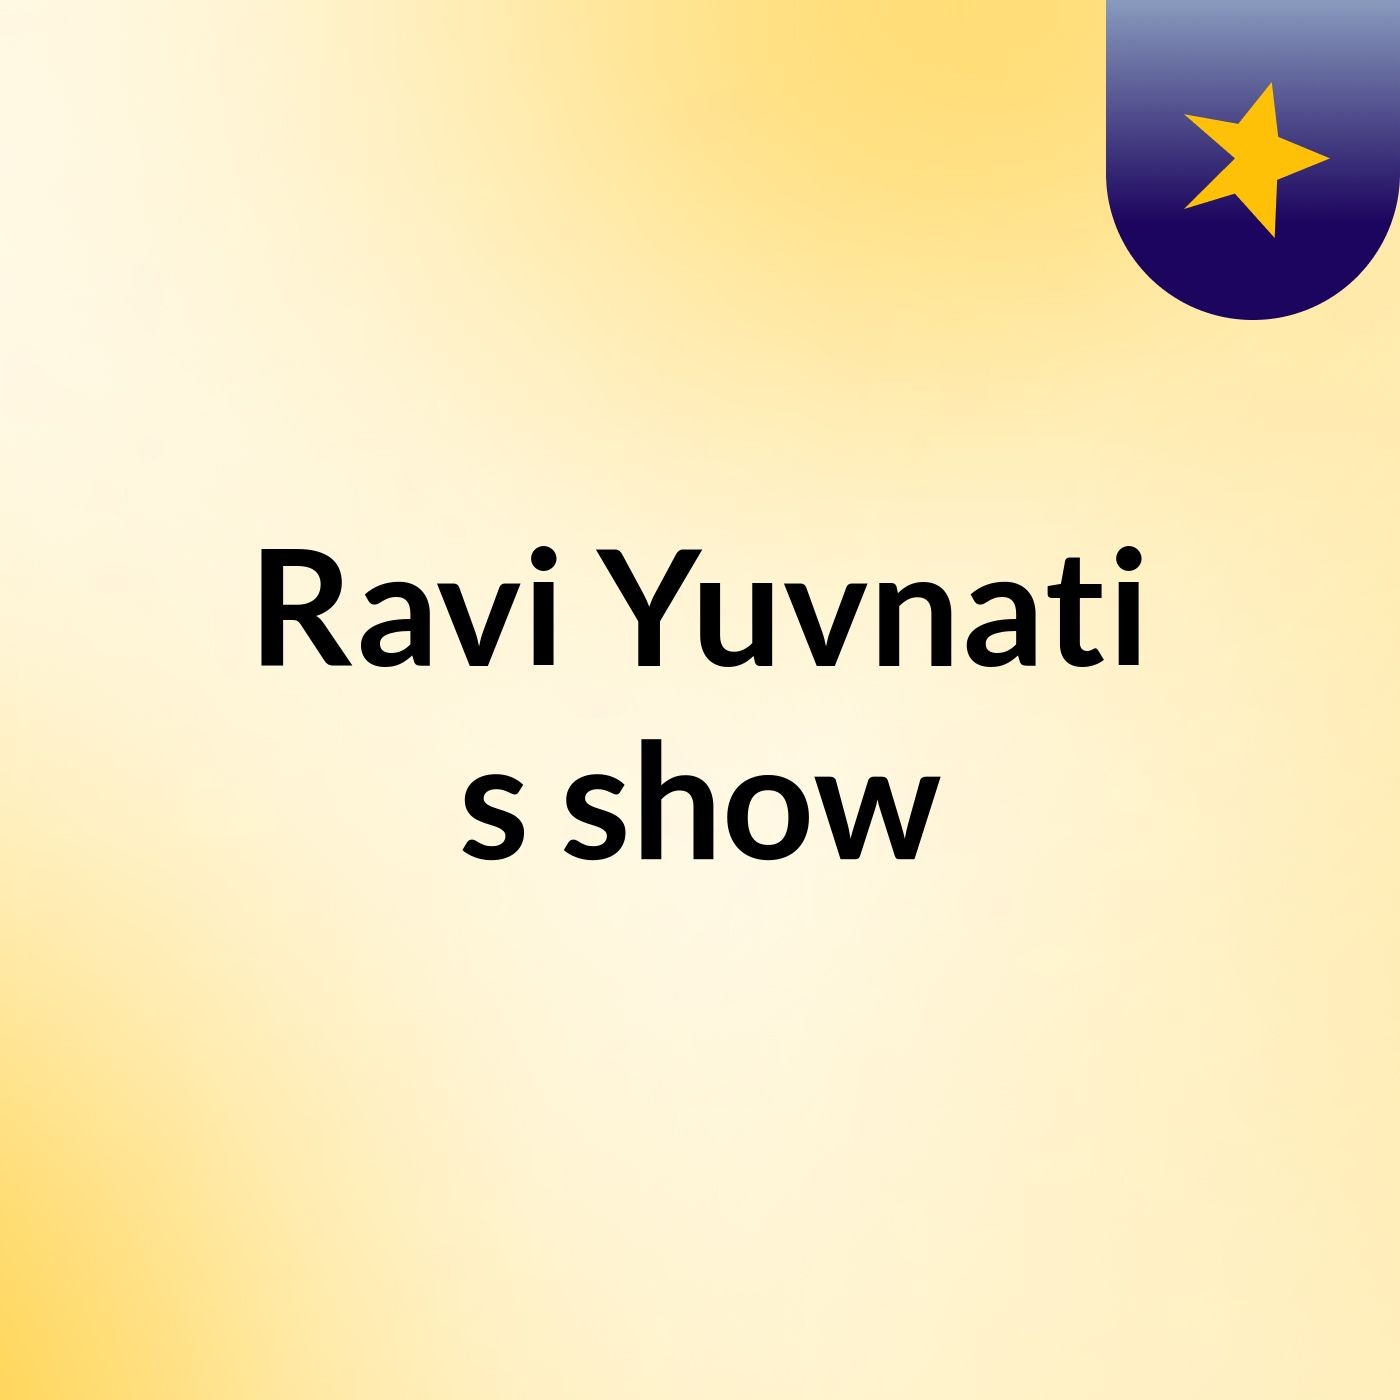 Ravi Yuvnati's show